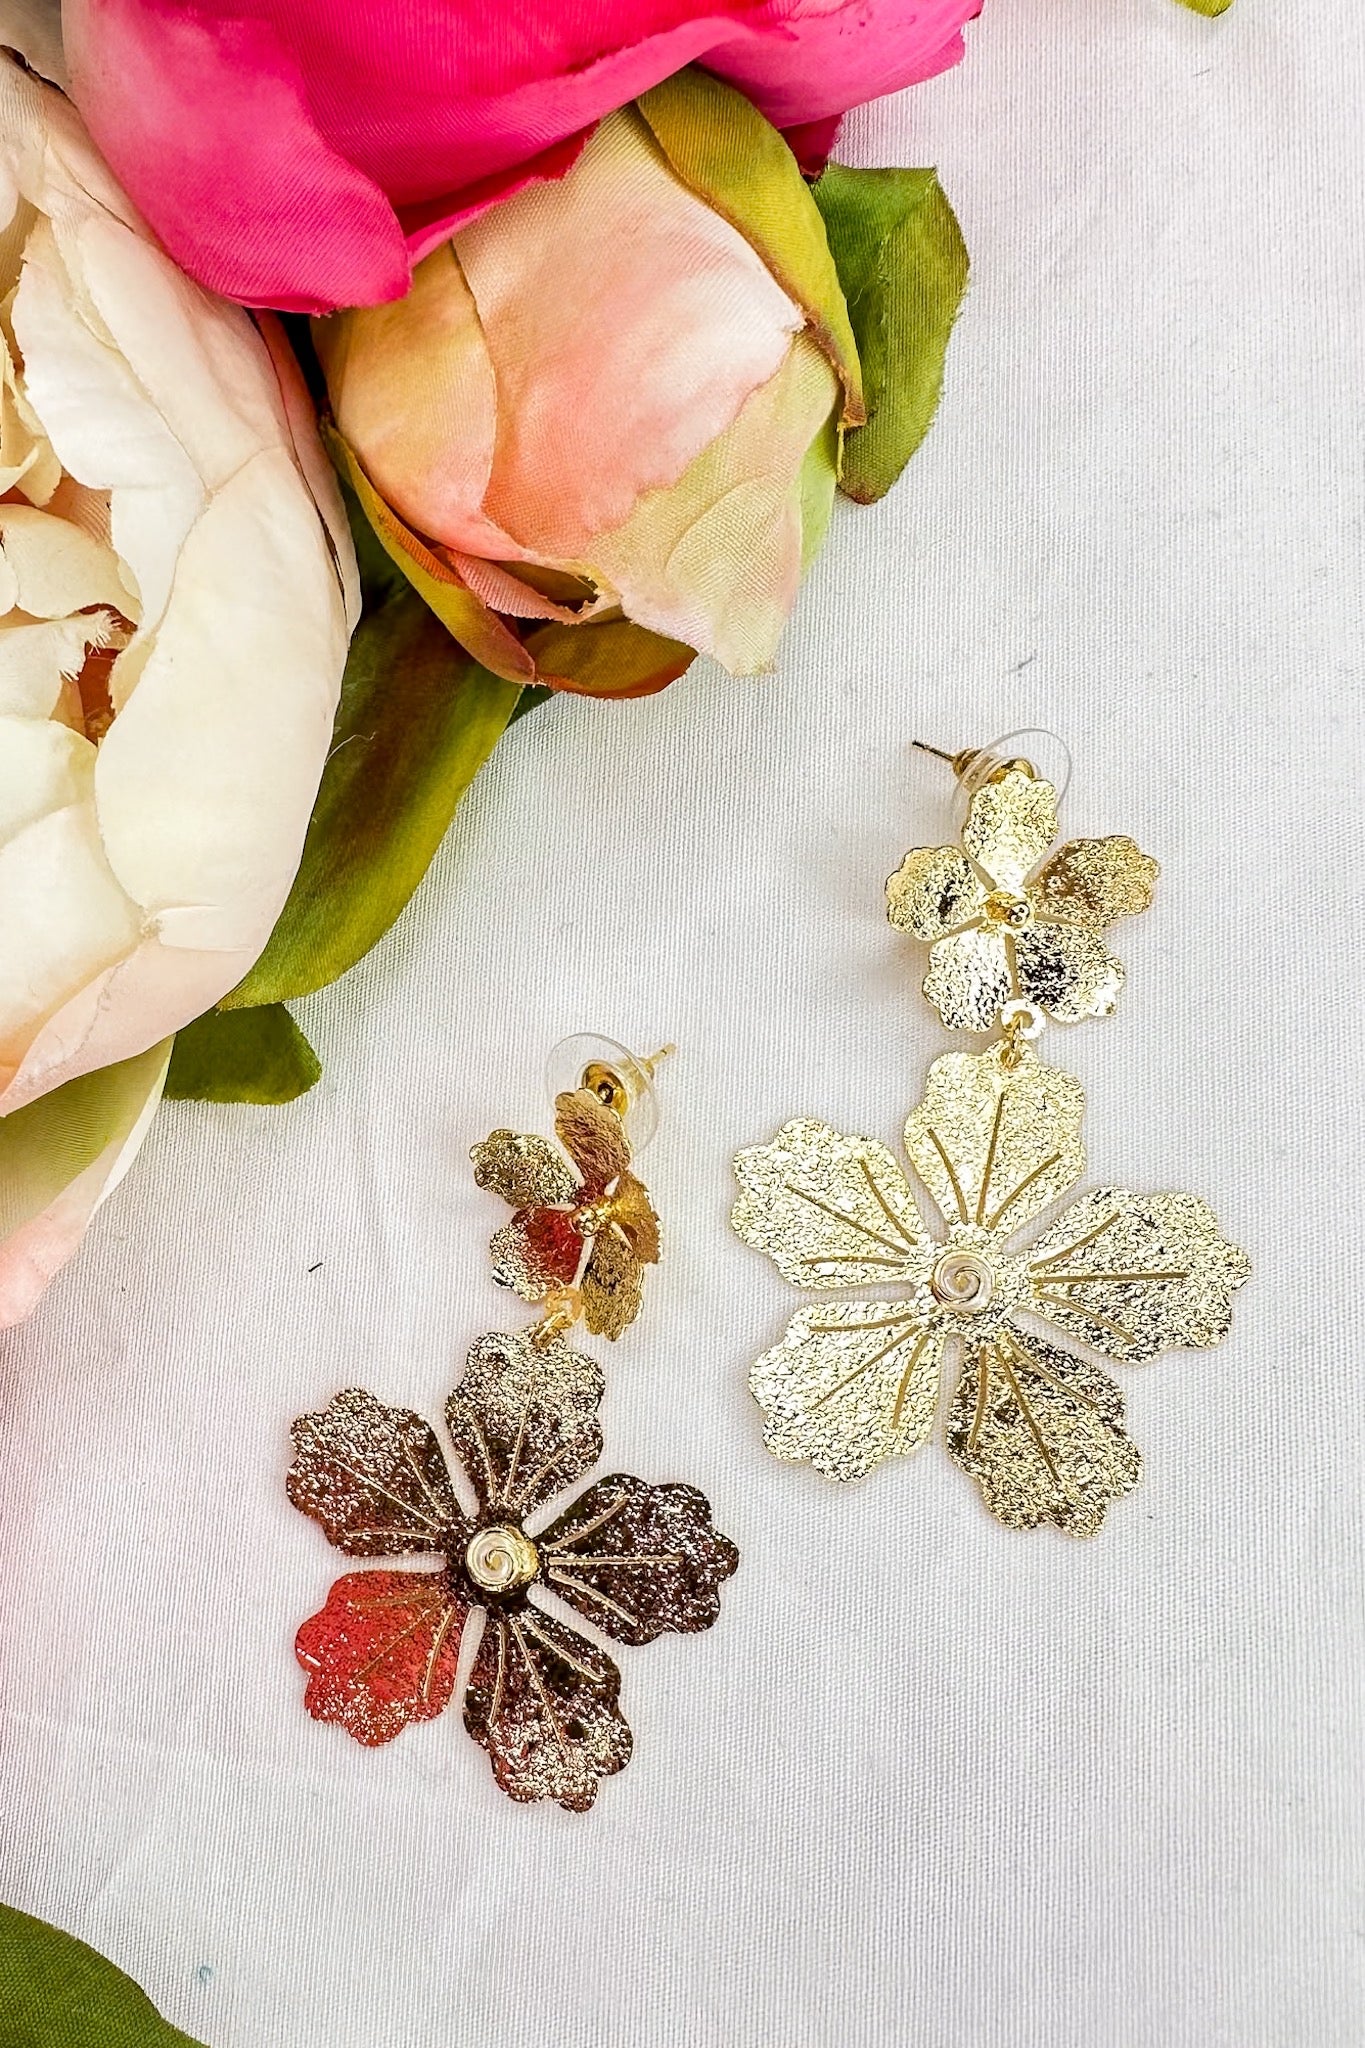 Magnolia Flower Earrings by Treasure Jewels